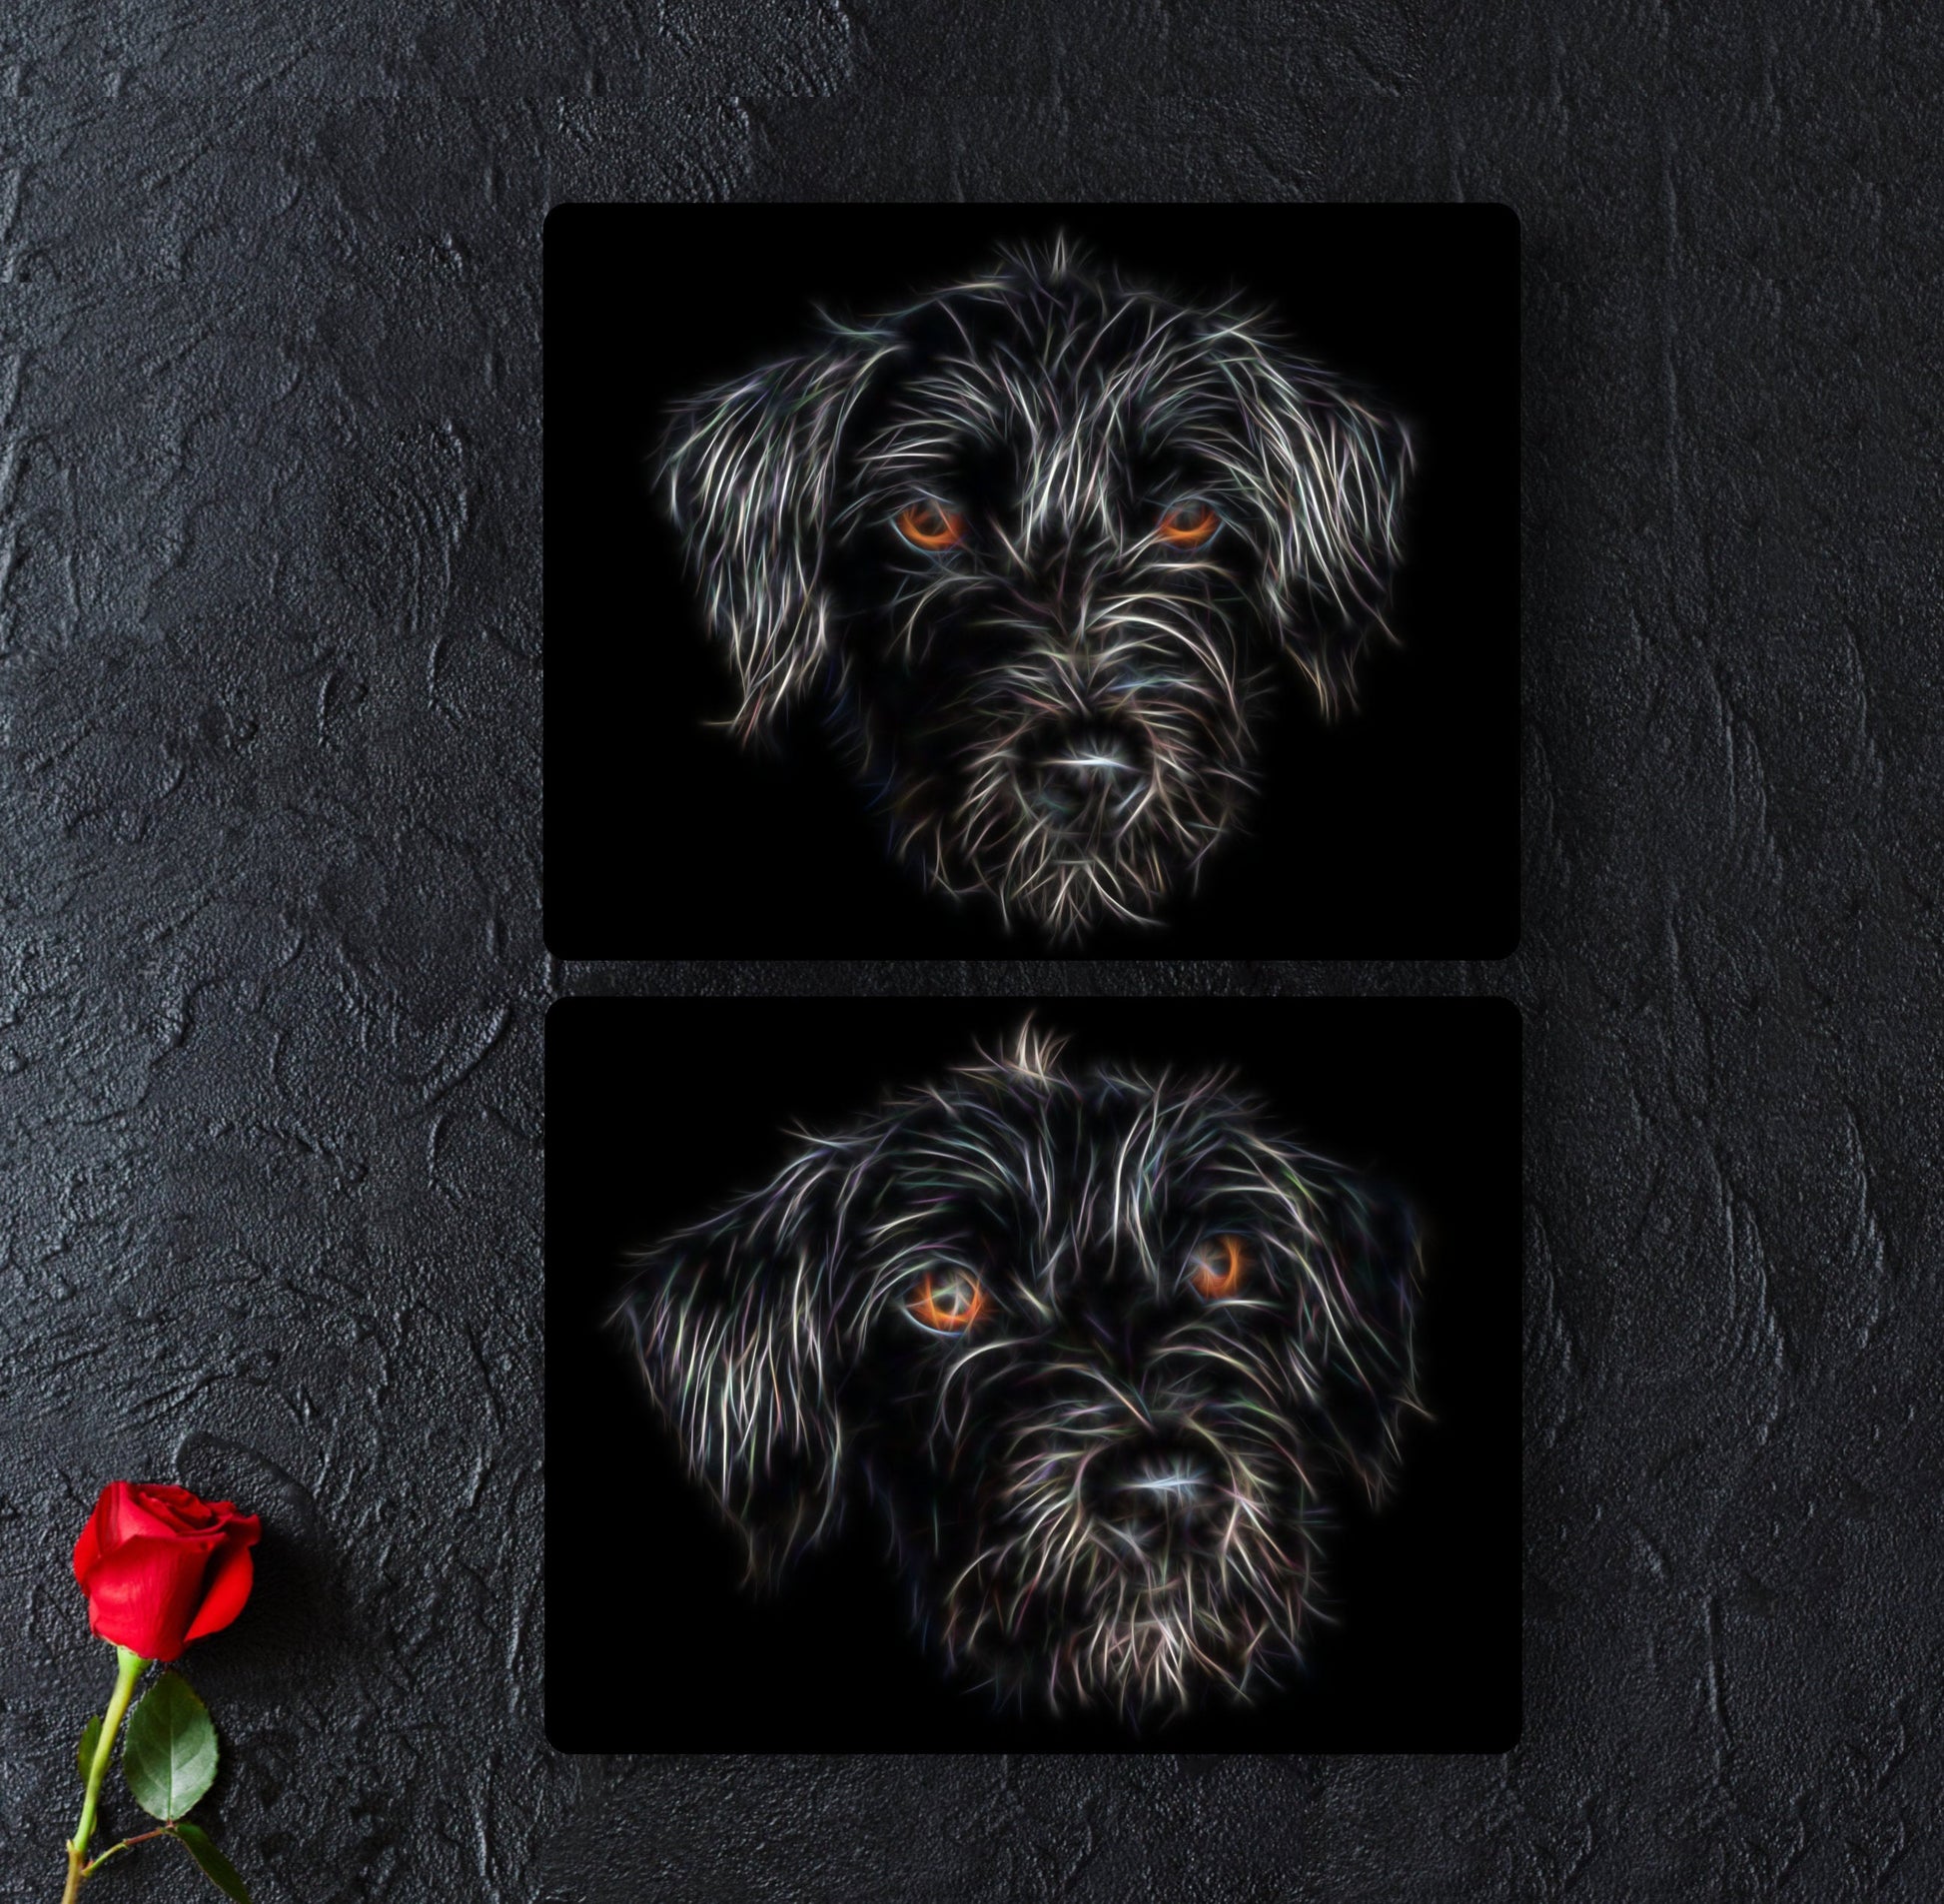 Black Jackapoo Dog Metal Wall Plaque with Fractal Art Design.